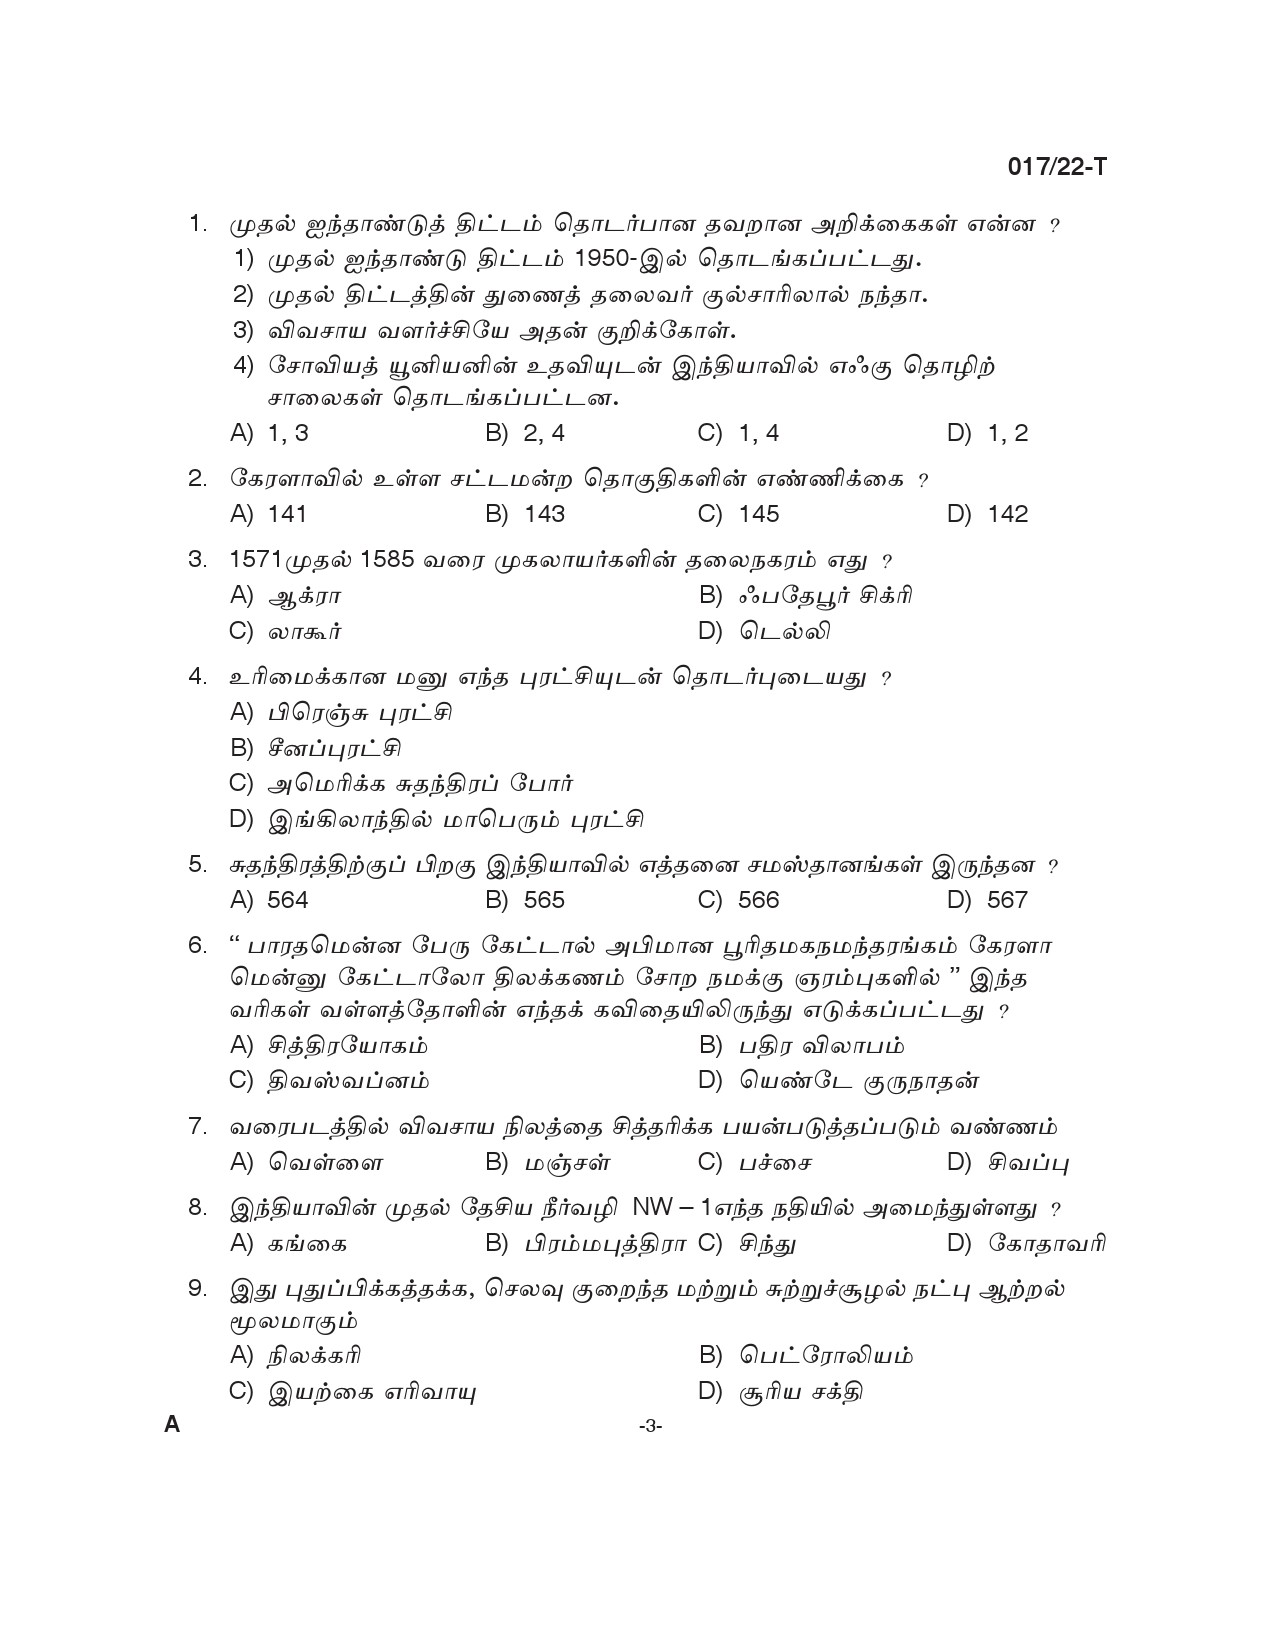 KPSC Police Constable Tamil Exam 2022 Code 0172022 T 2